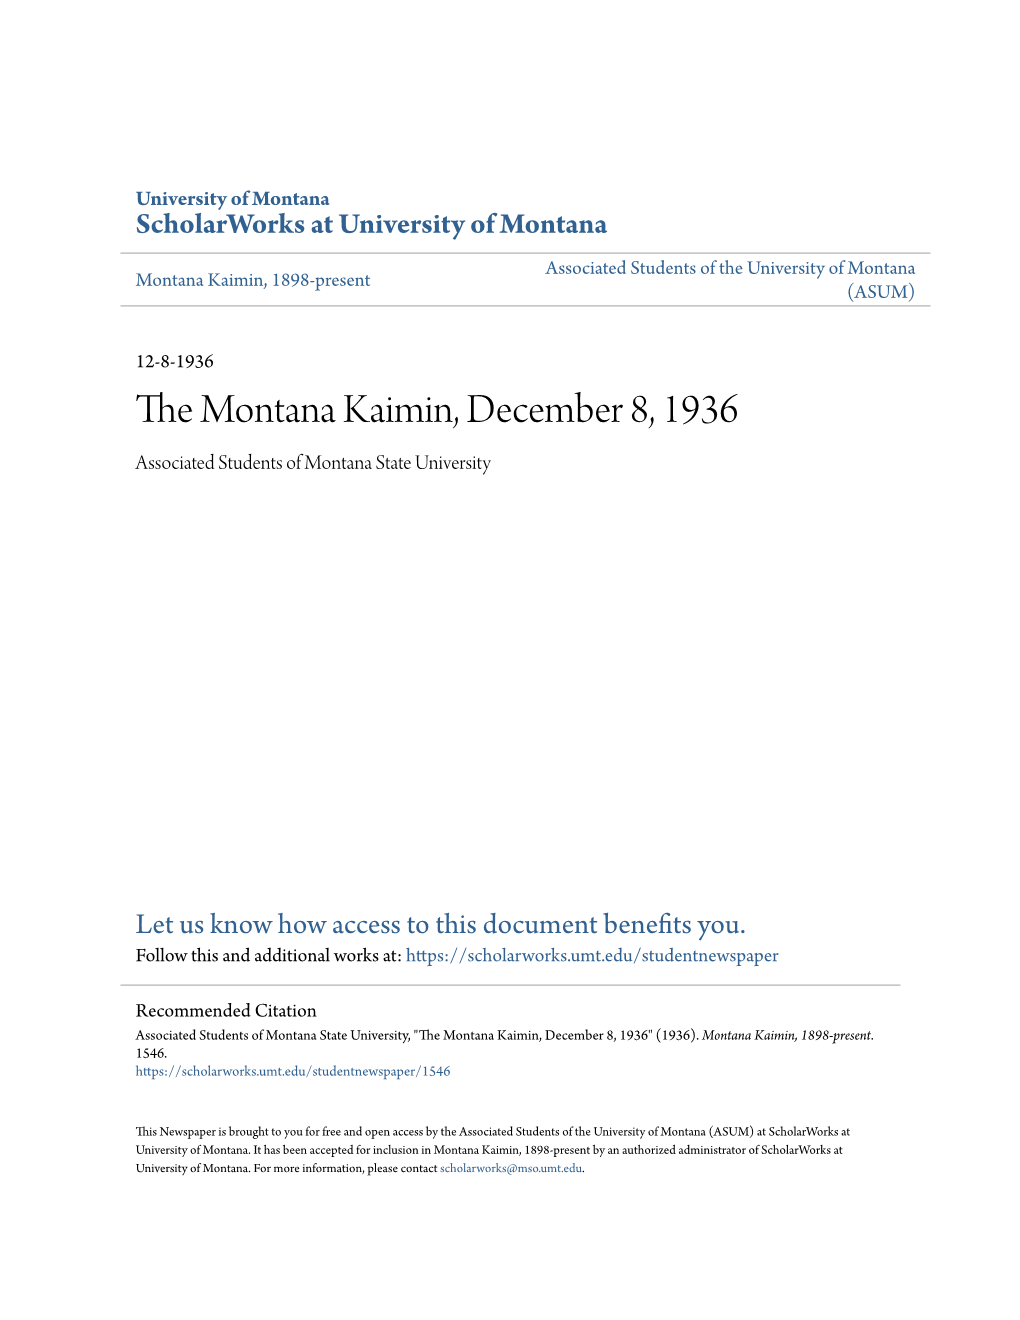 The Montana Kaimin, December 8, 1936